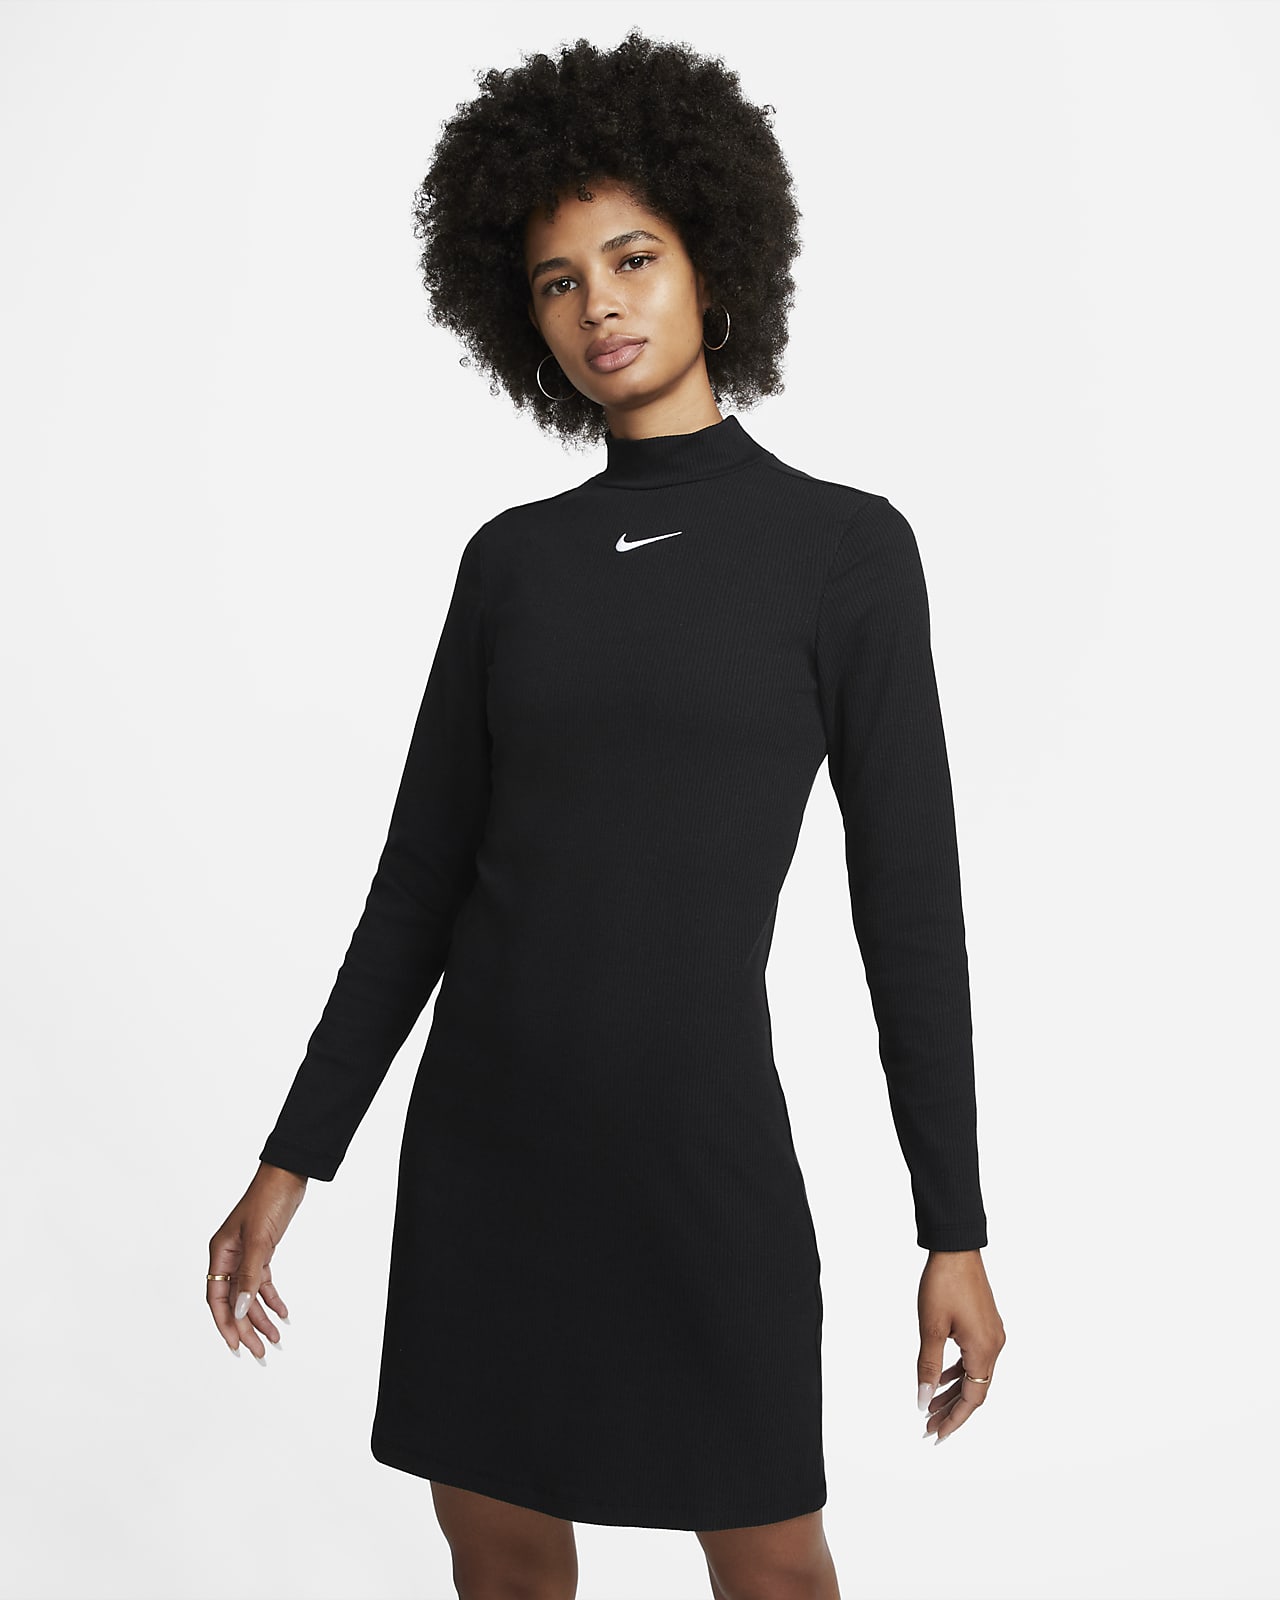 Vestido de cuello alto y manga larga para mujer Nike Sportswear Nike .com